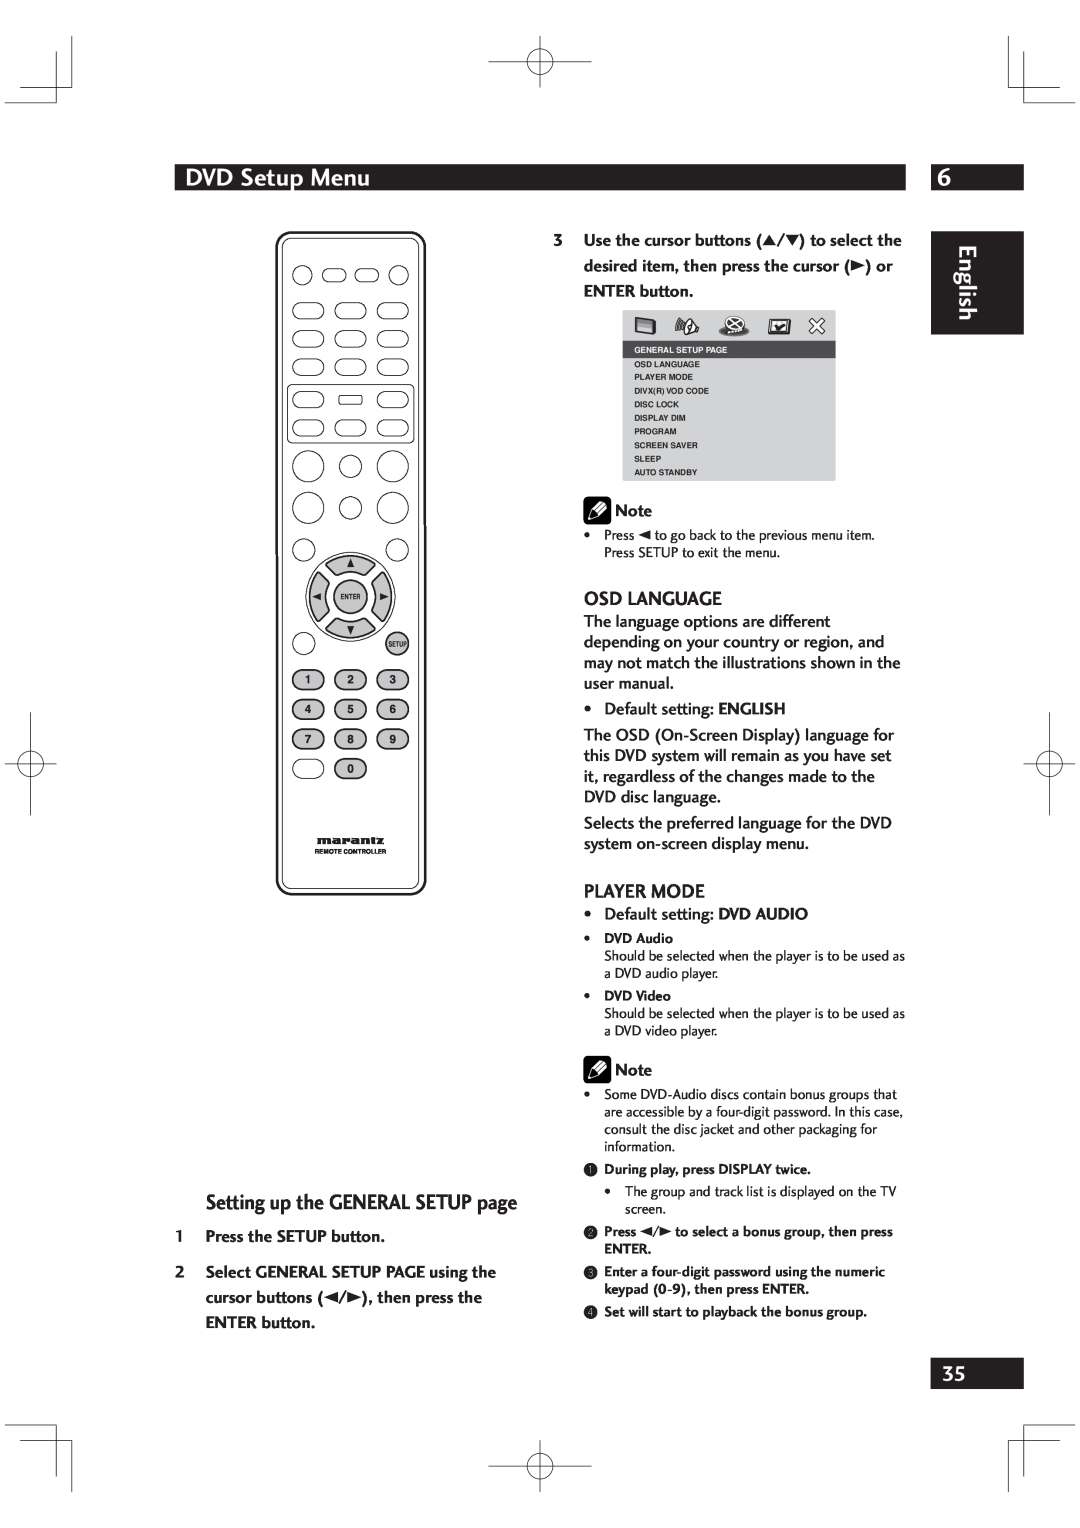 Marantz VC6001 manual DVD Setup Menu, Osd Language, Player Mode, Setting up the GENERAL SETUP page 1 Press the SETUP button 